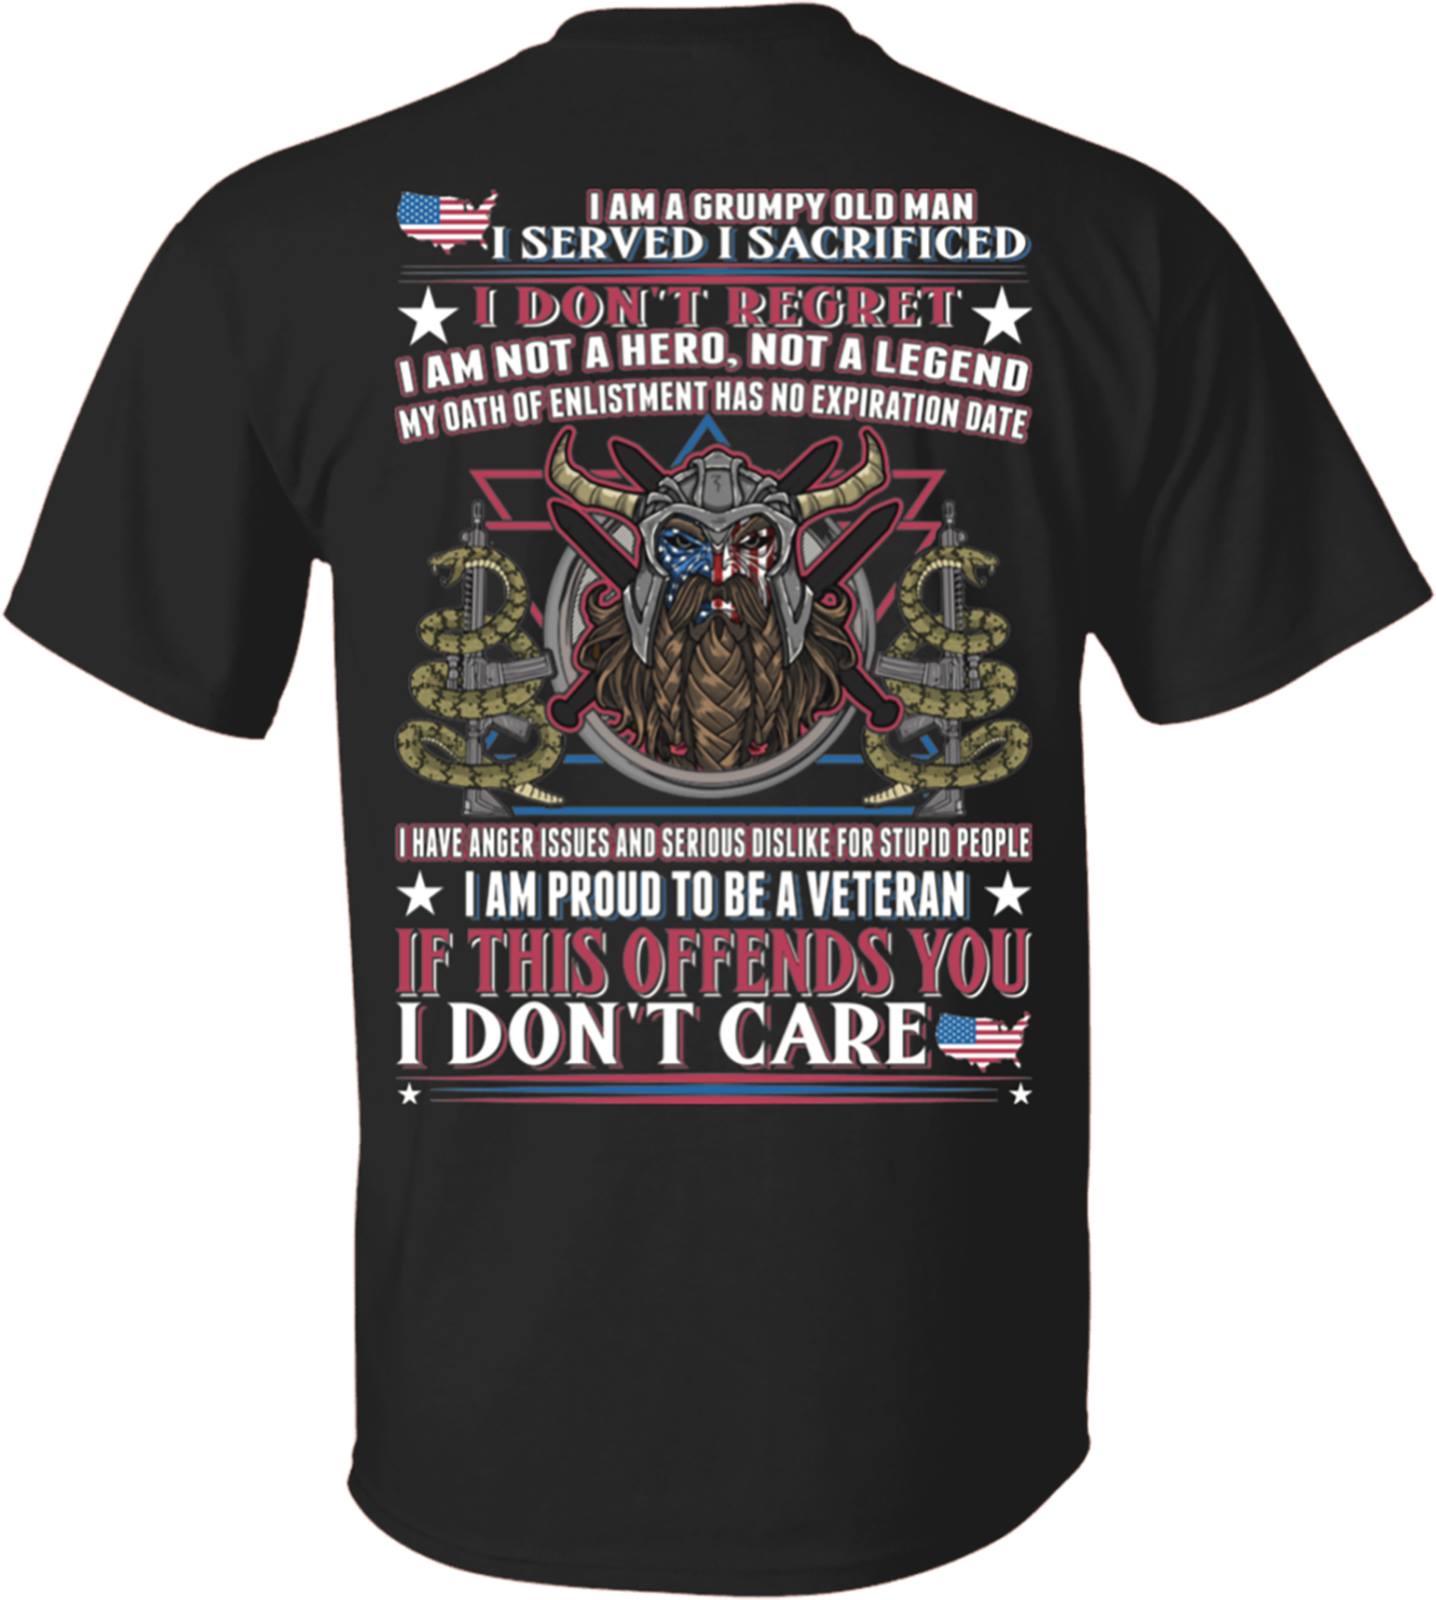 I am a grumpy old man I served I sacrified I don't regret - America veteran